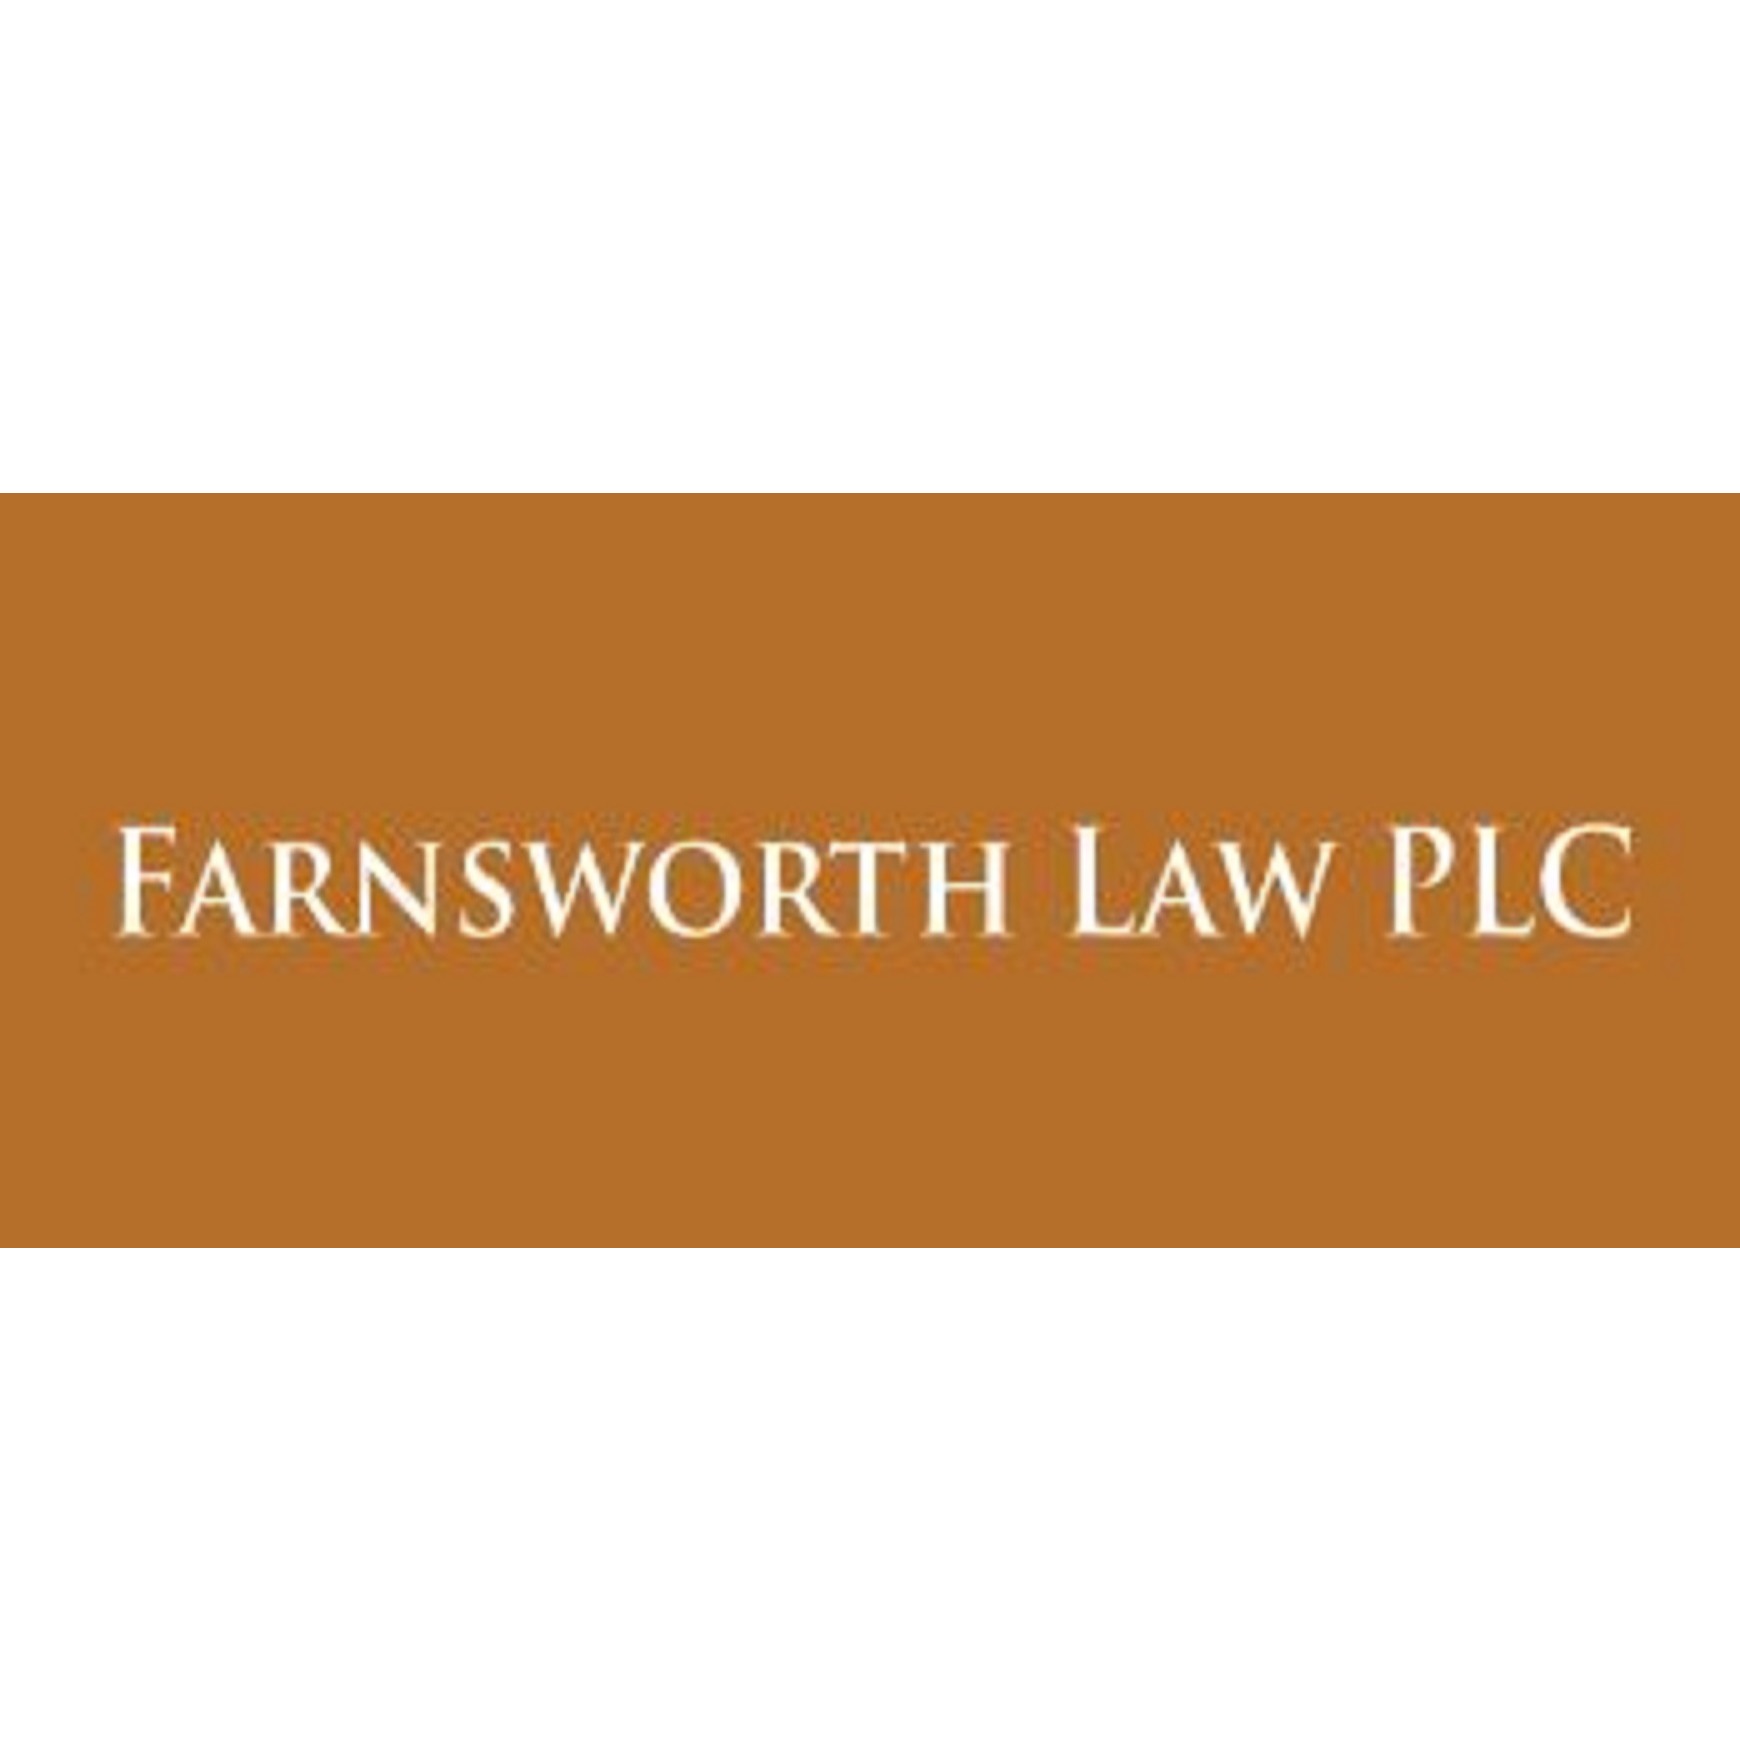 Farnsworth Law PLC - Iowa CIty, IA 52240 - (319)333-1869 | ShowMeLocal.com